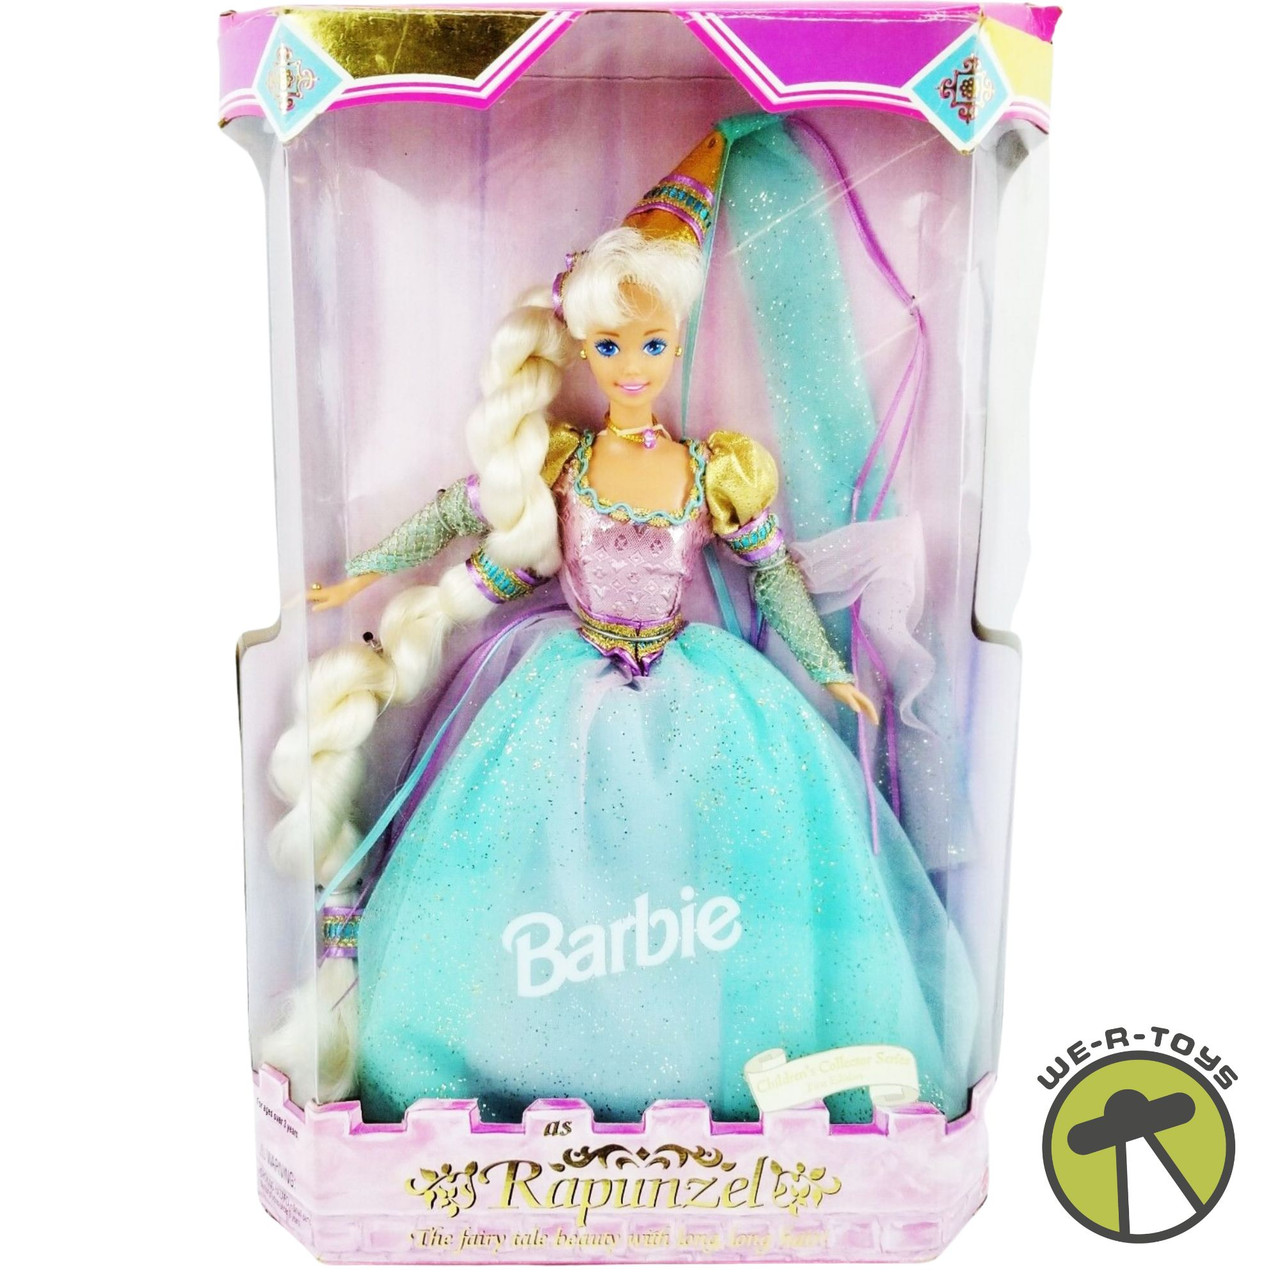 Barbie(バービー) as RAPUNZEL 人形 First エディション CHILDREN'S